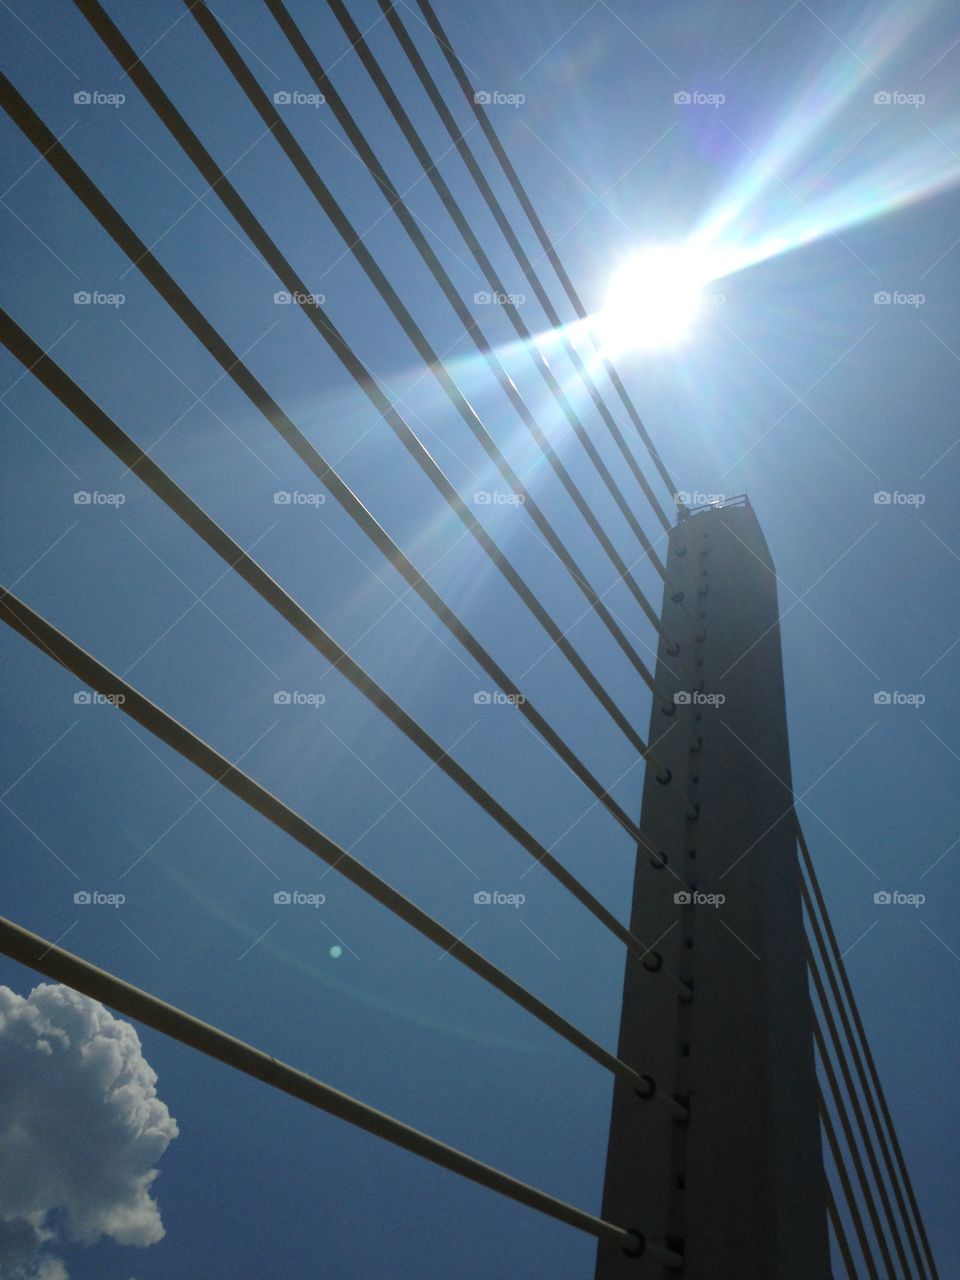 Sun and bridge